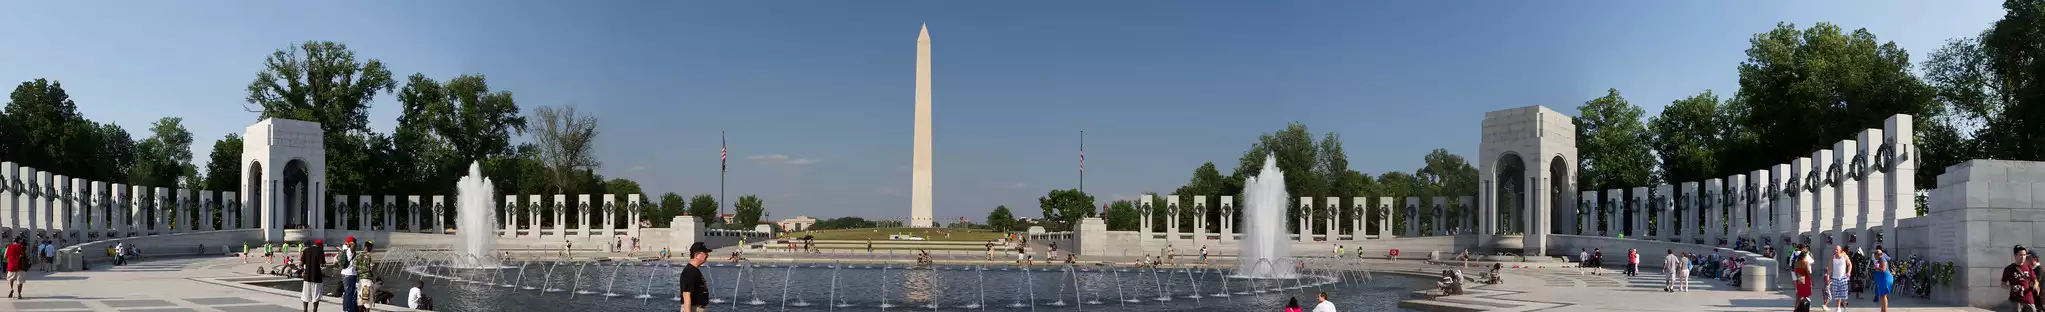 Washington Monument & World War II Memorial